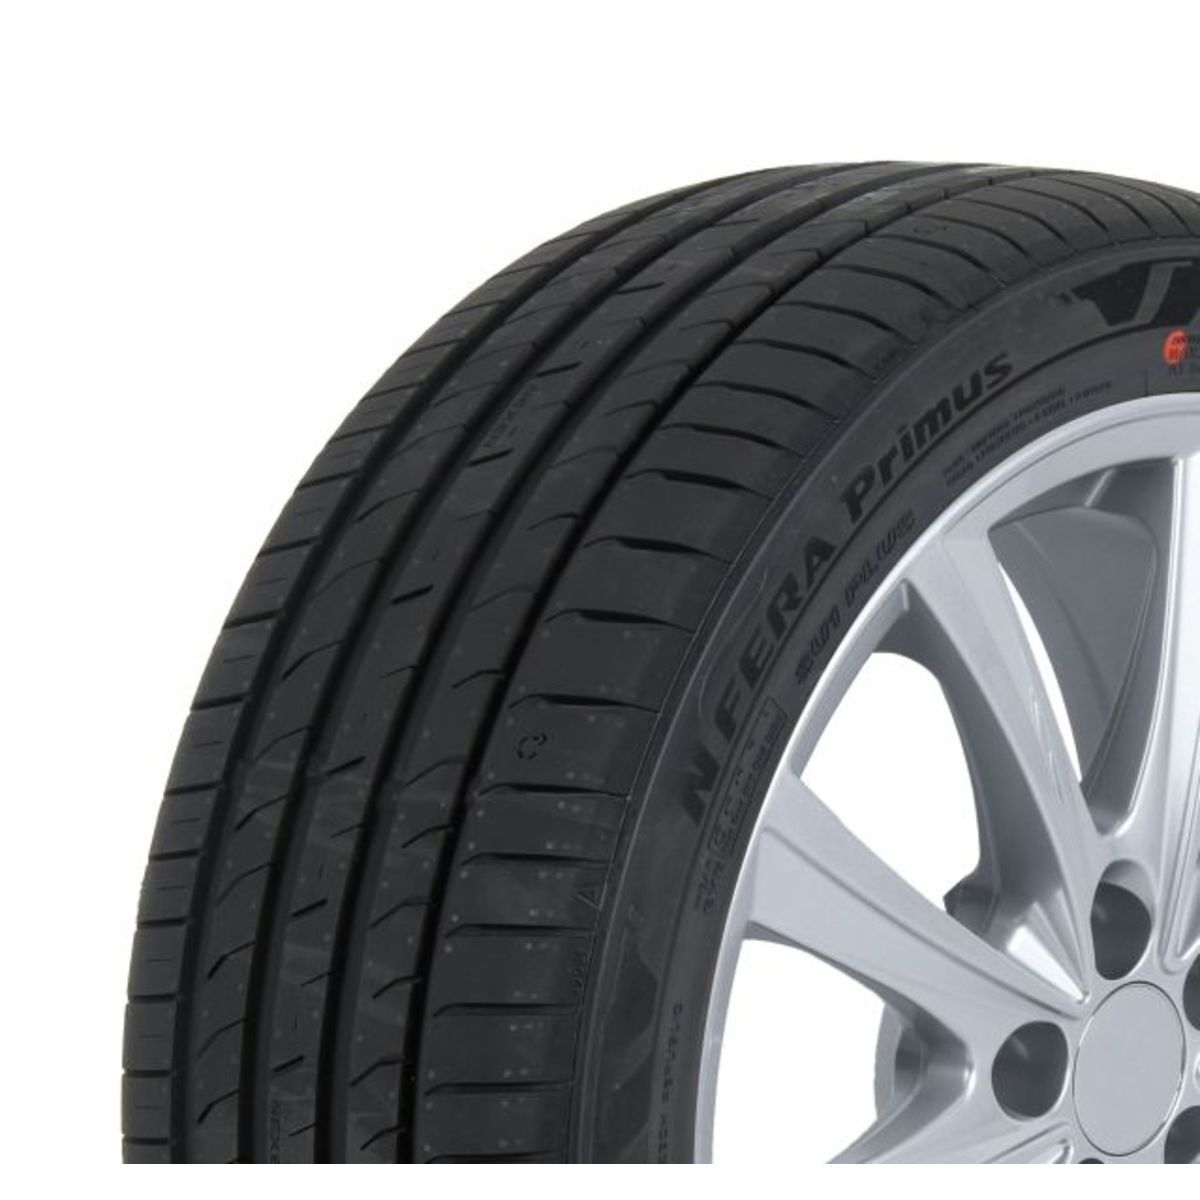 Neumáticos de verano NEXEN NFera Primus 235/40R17 XL 94W